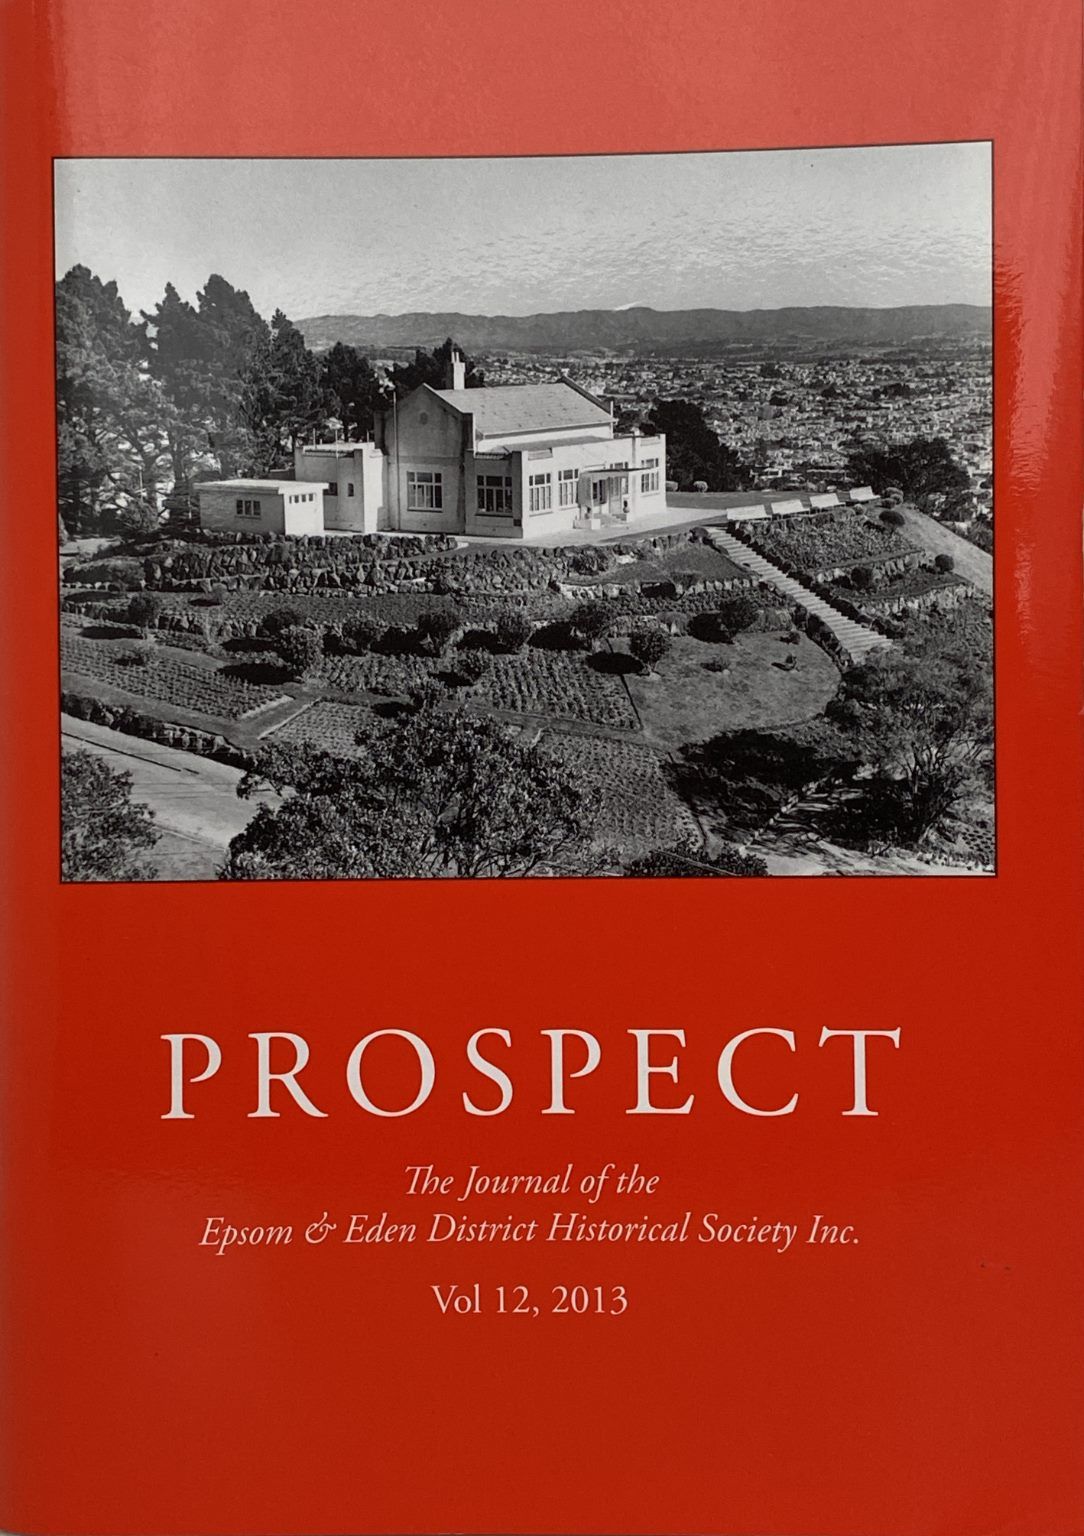 PROSPECT: Journal of the Epsom & Eden District Historical Society - Vol 12, 2013